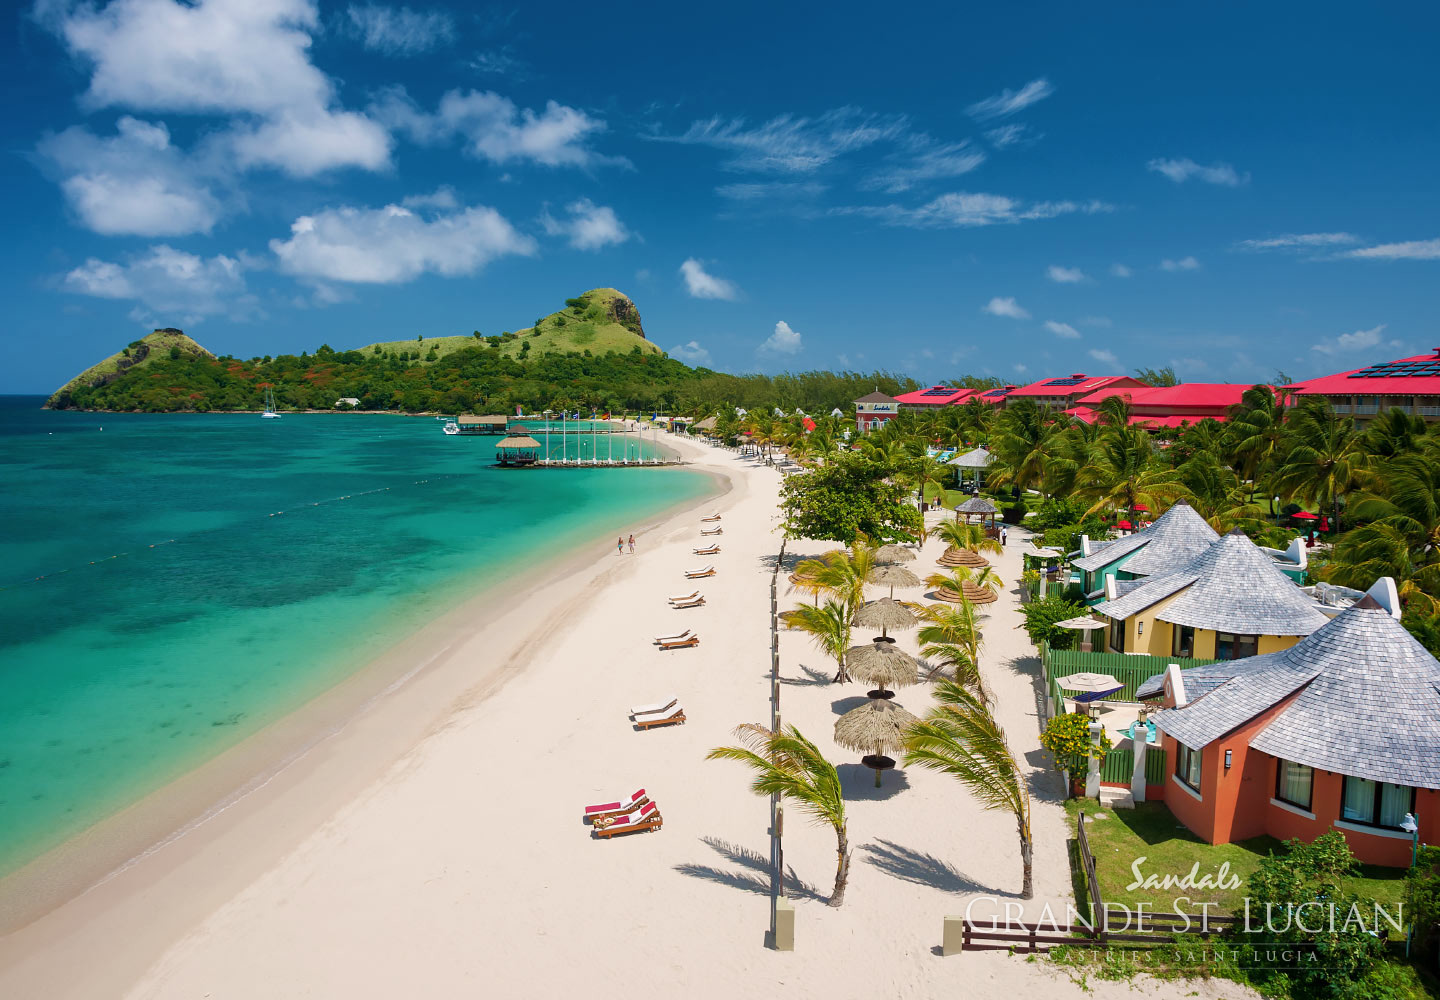 Sandals Grande St. Lucian Spa & Beach Resort | Castries, St. Lucia